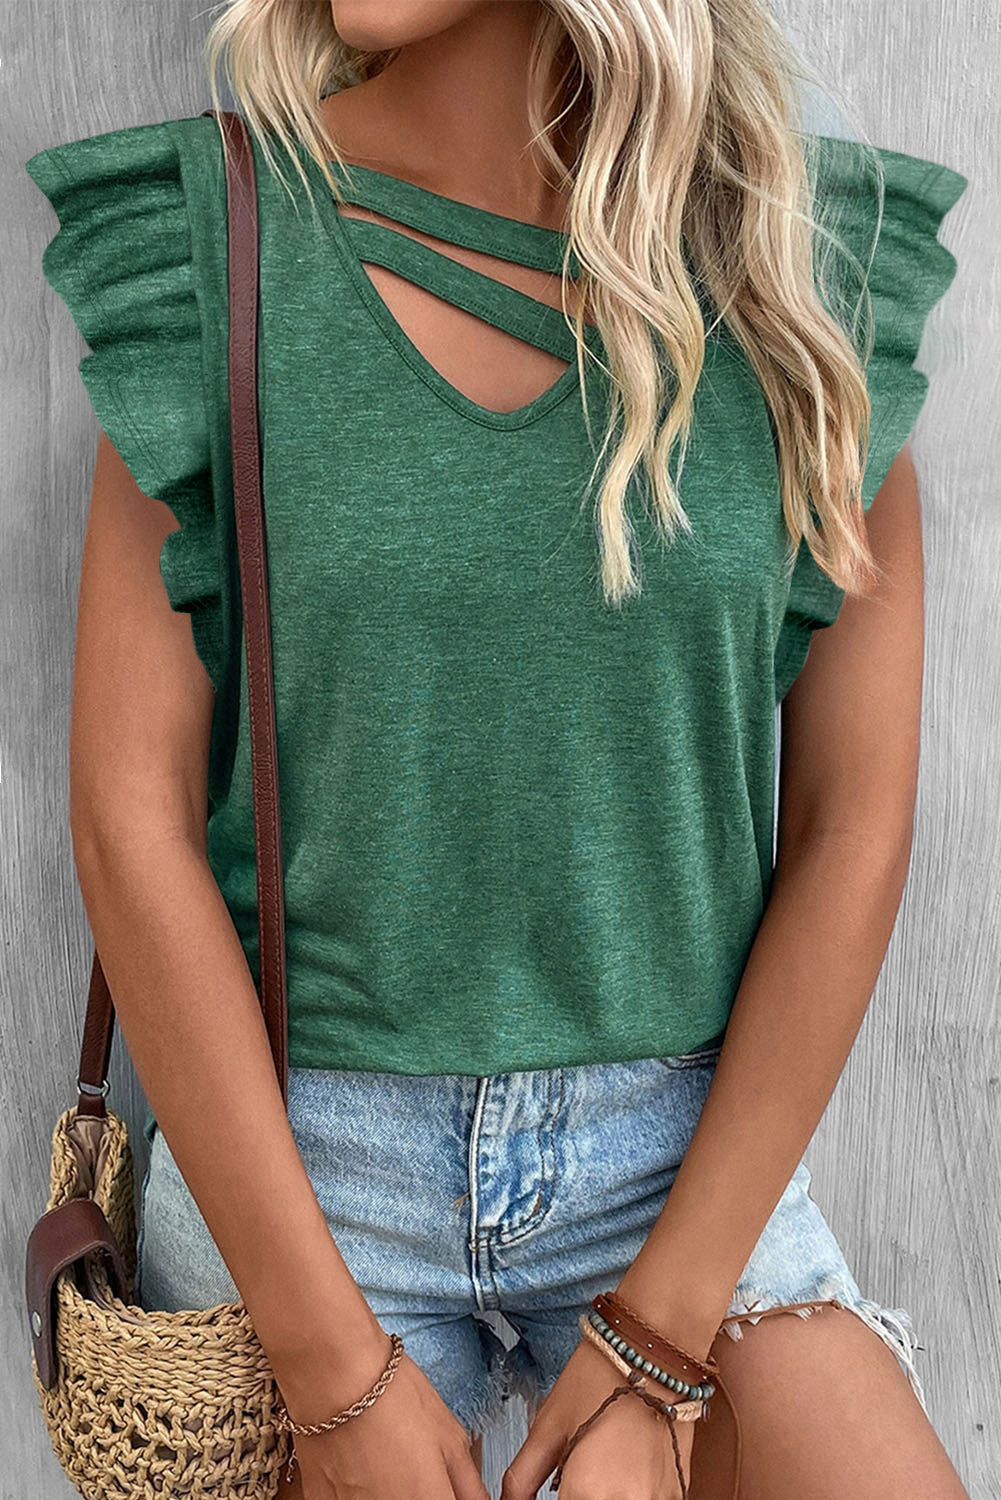 Green Solid Color Ruffle Sleeveless V Neck T Shirt